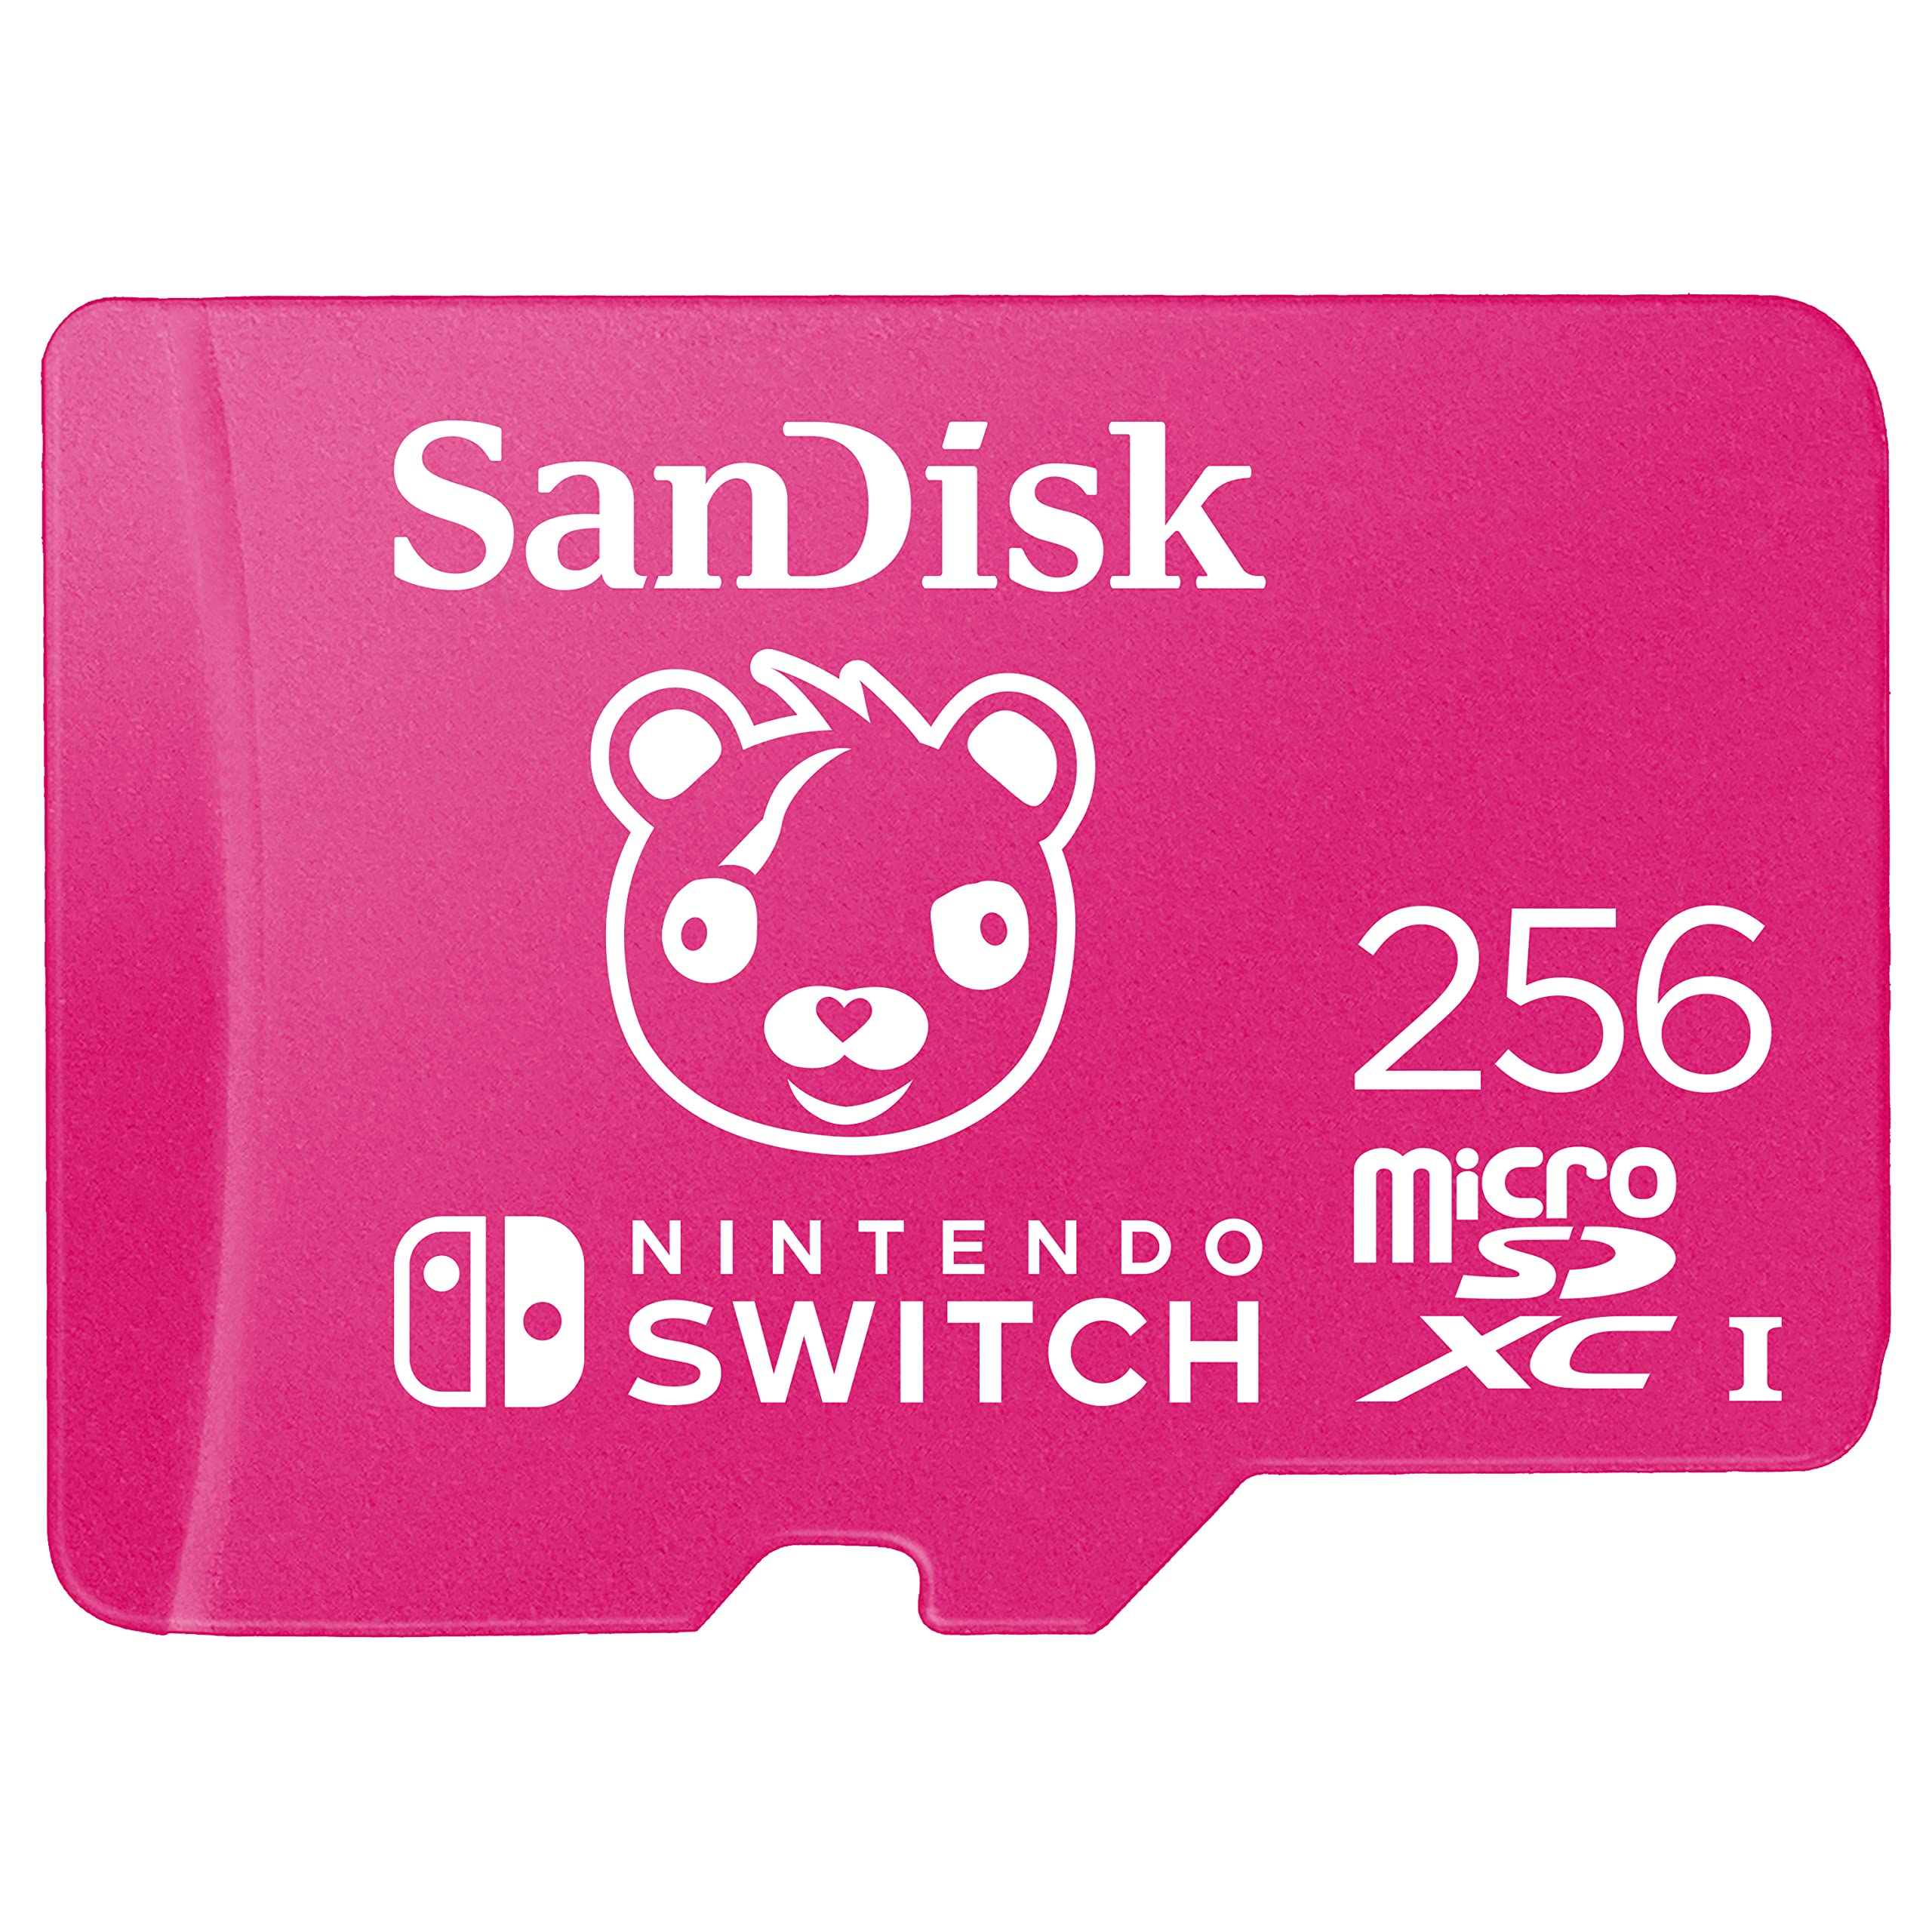 SanDisk 256GB microSDXC Card Licensed for Nintendo Switch $27.99